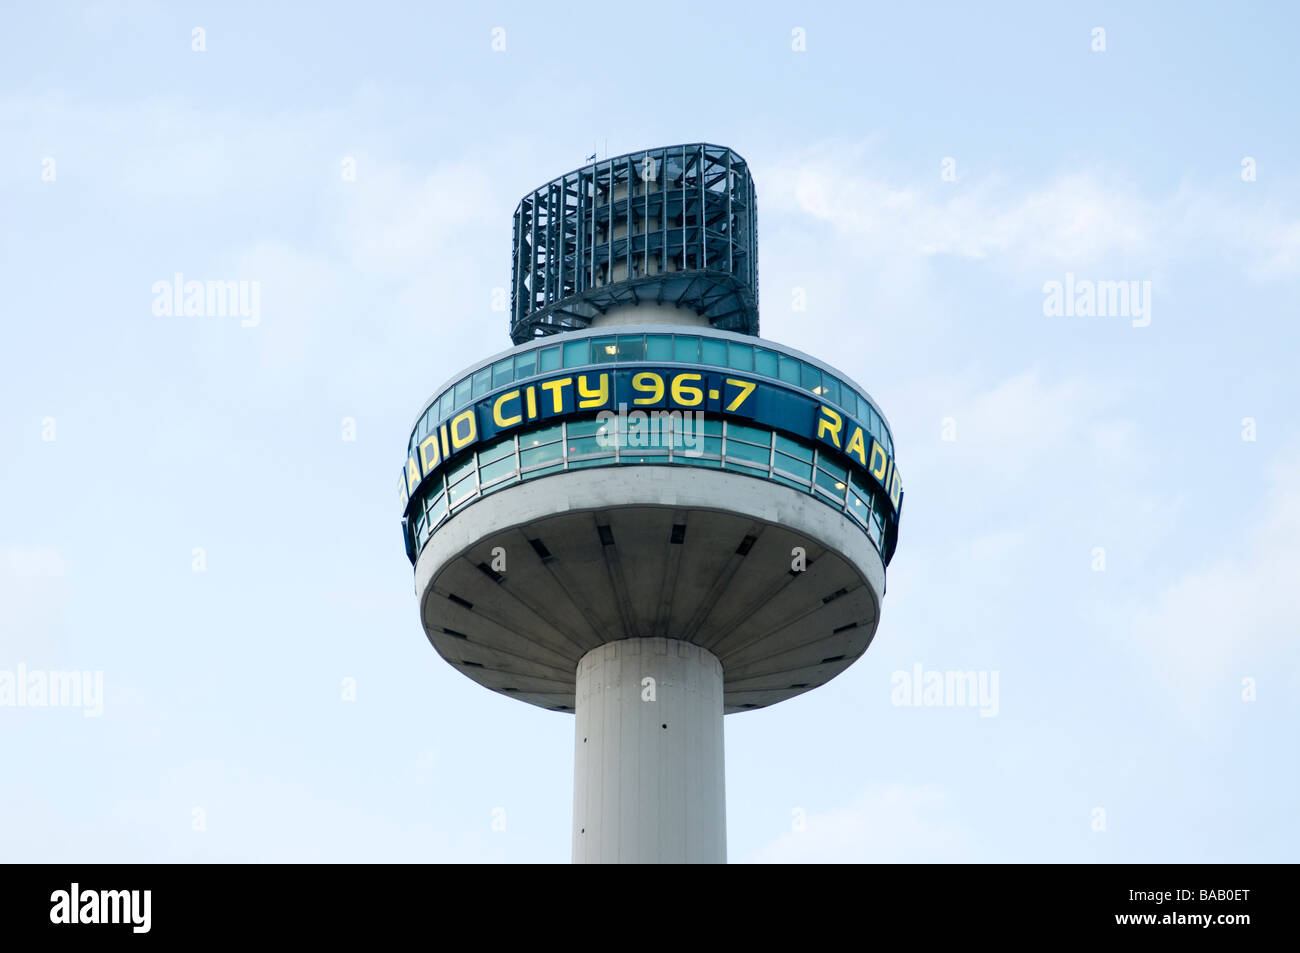 Liverpool Radio City 96,7 Turm Merseyside UK Stockfoto